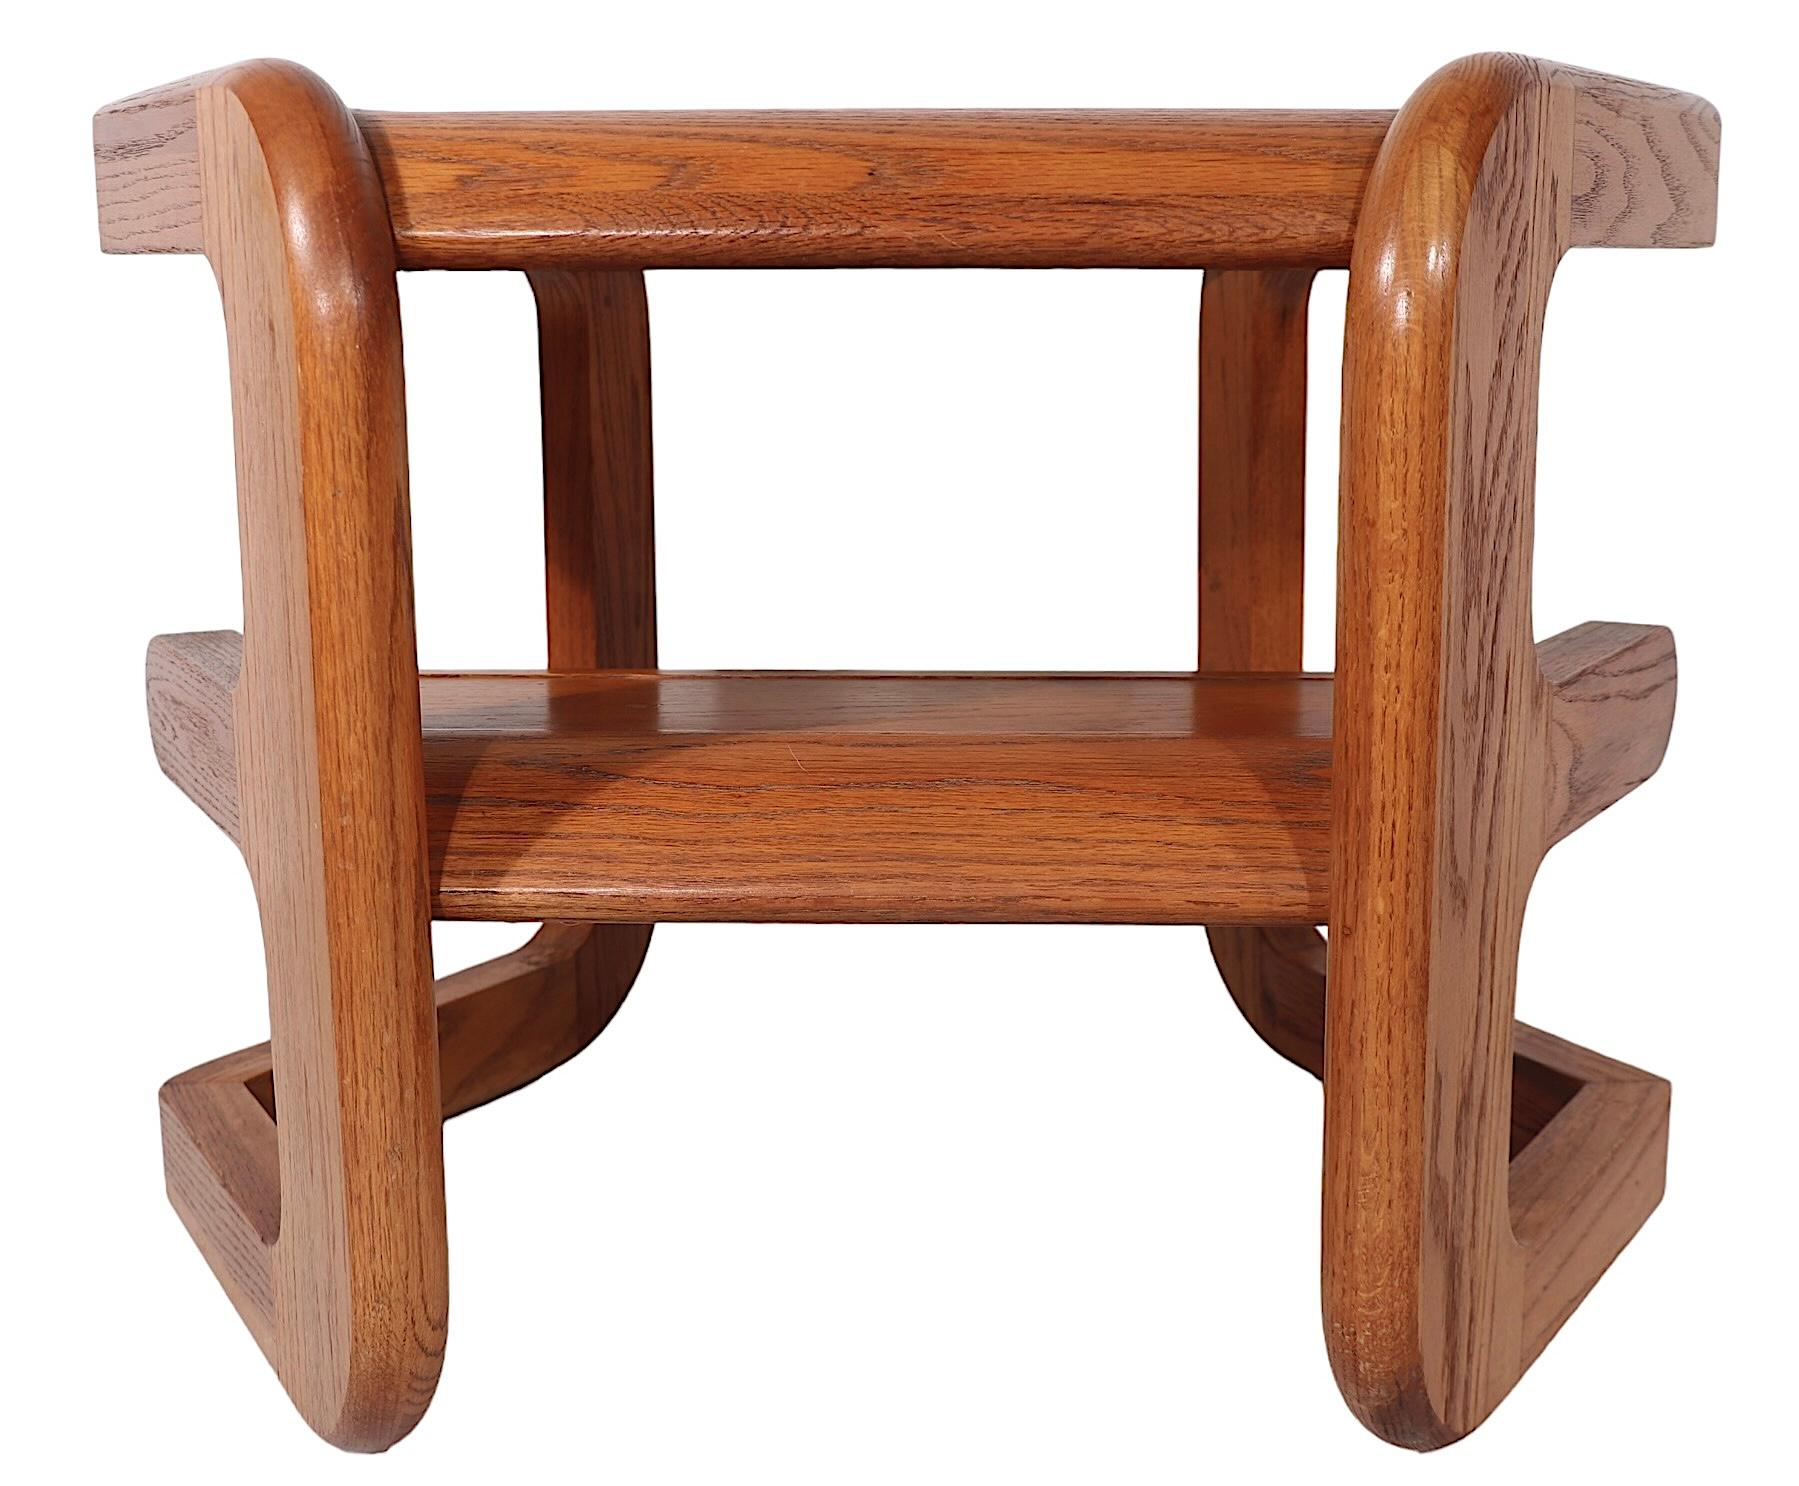 Post-Modern Mersman Side Table designed by Lou Hodges for Mersman c. 1970's For Sale